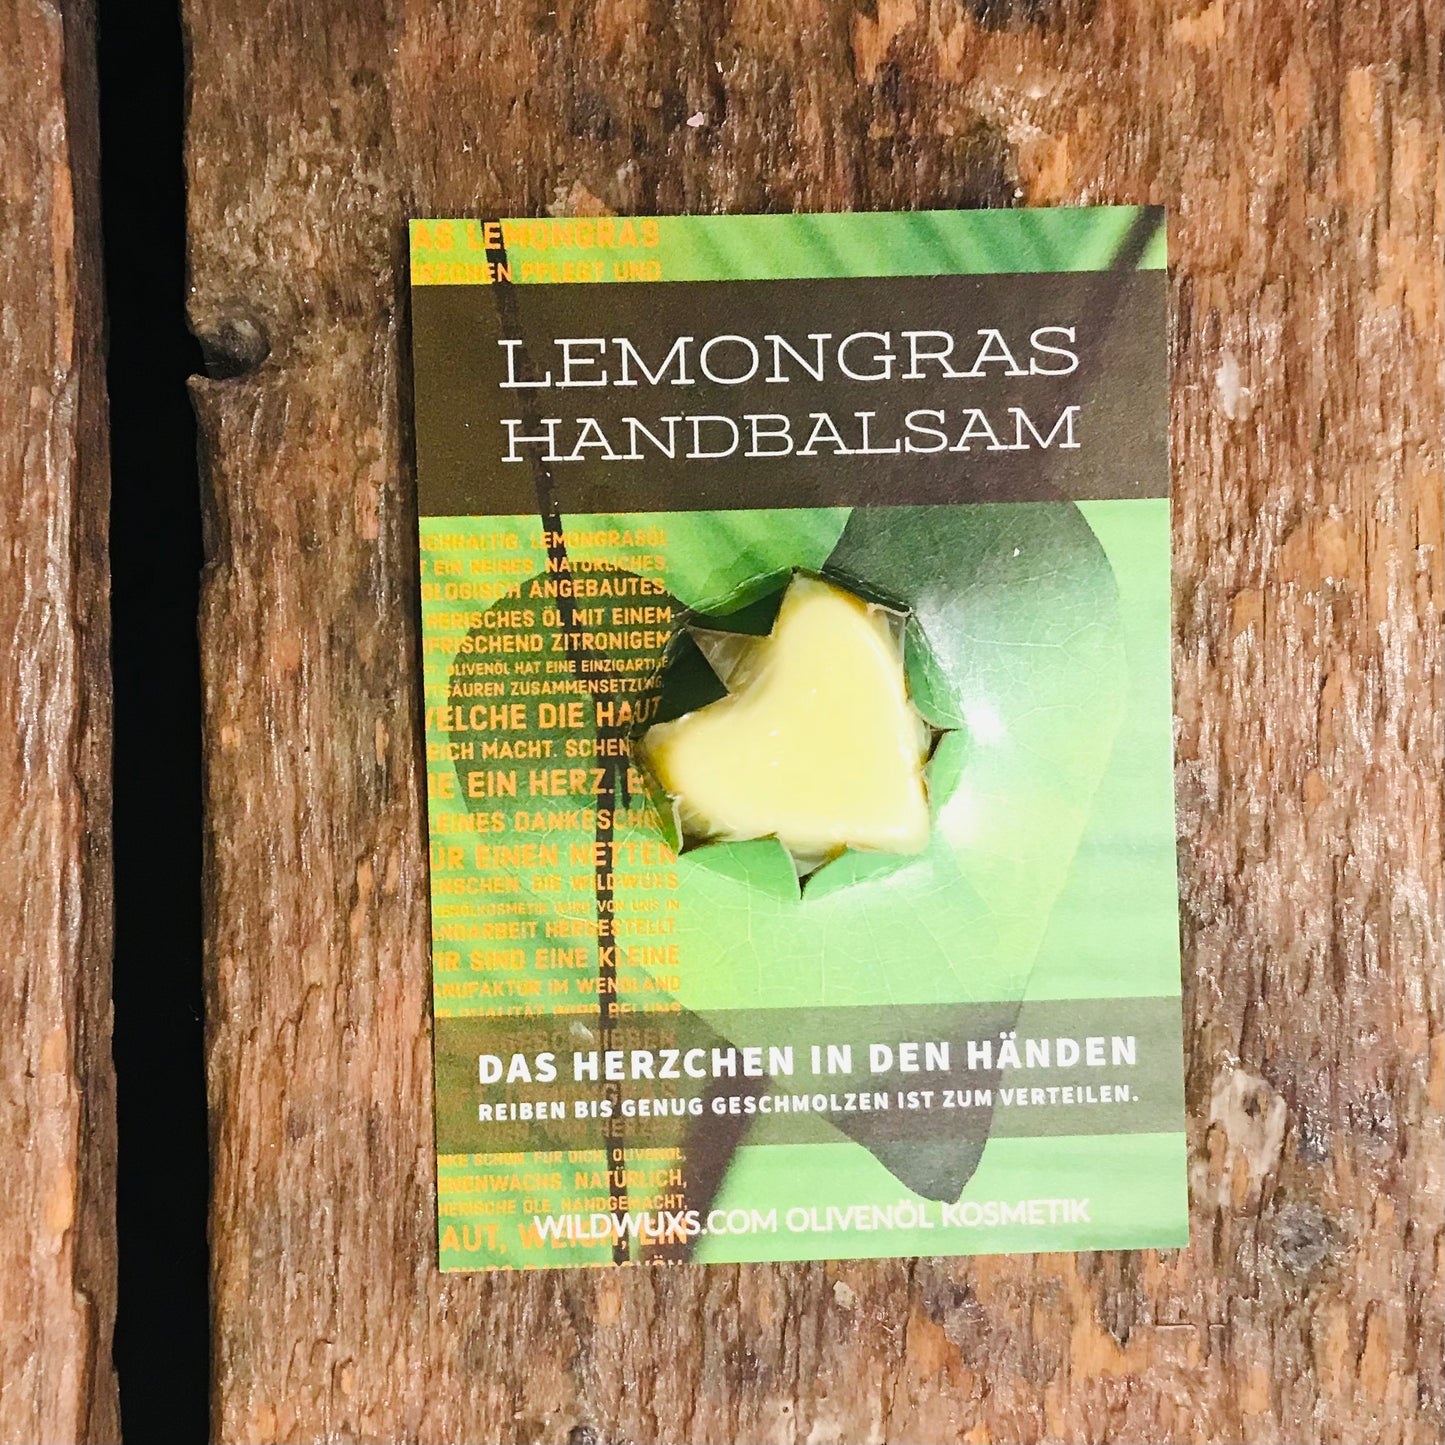 Handbalsam // Herzchen Lemongras